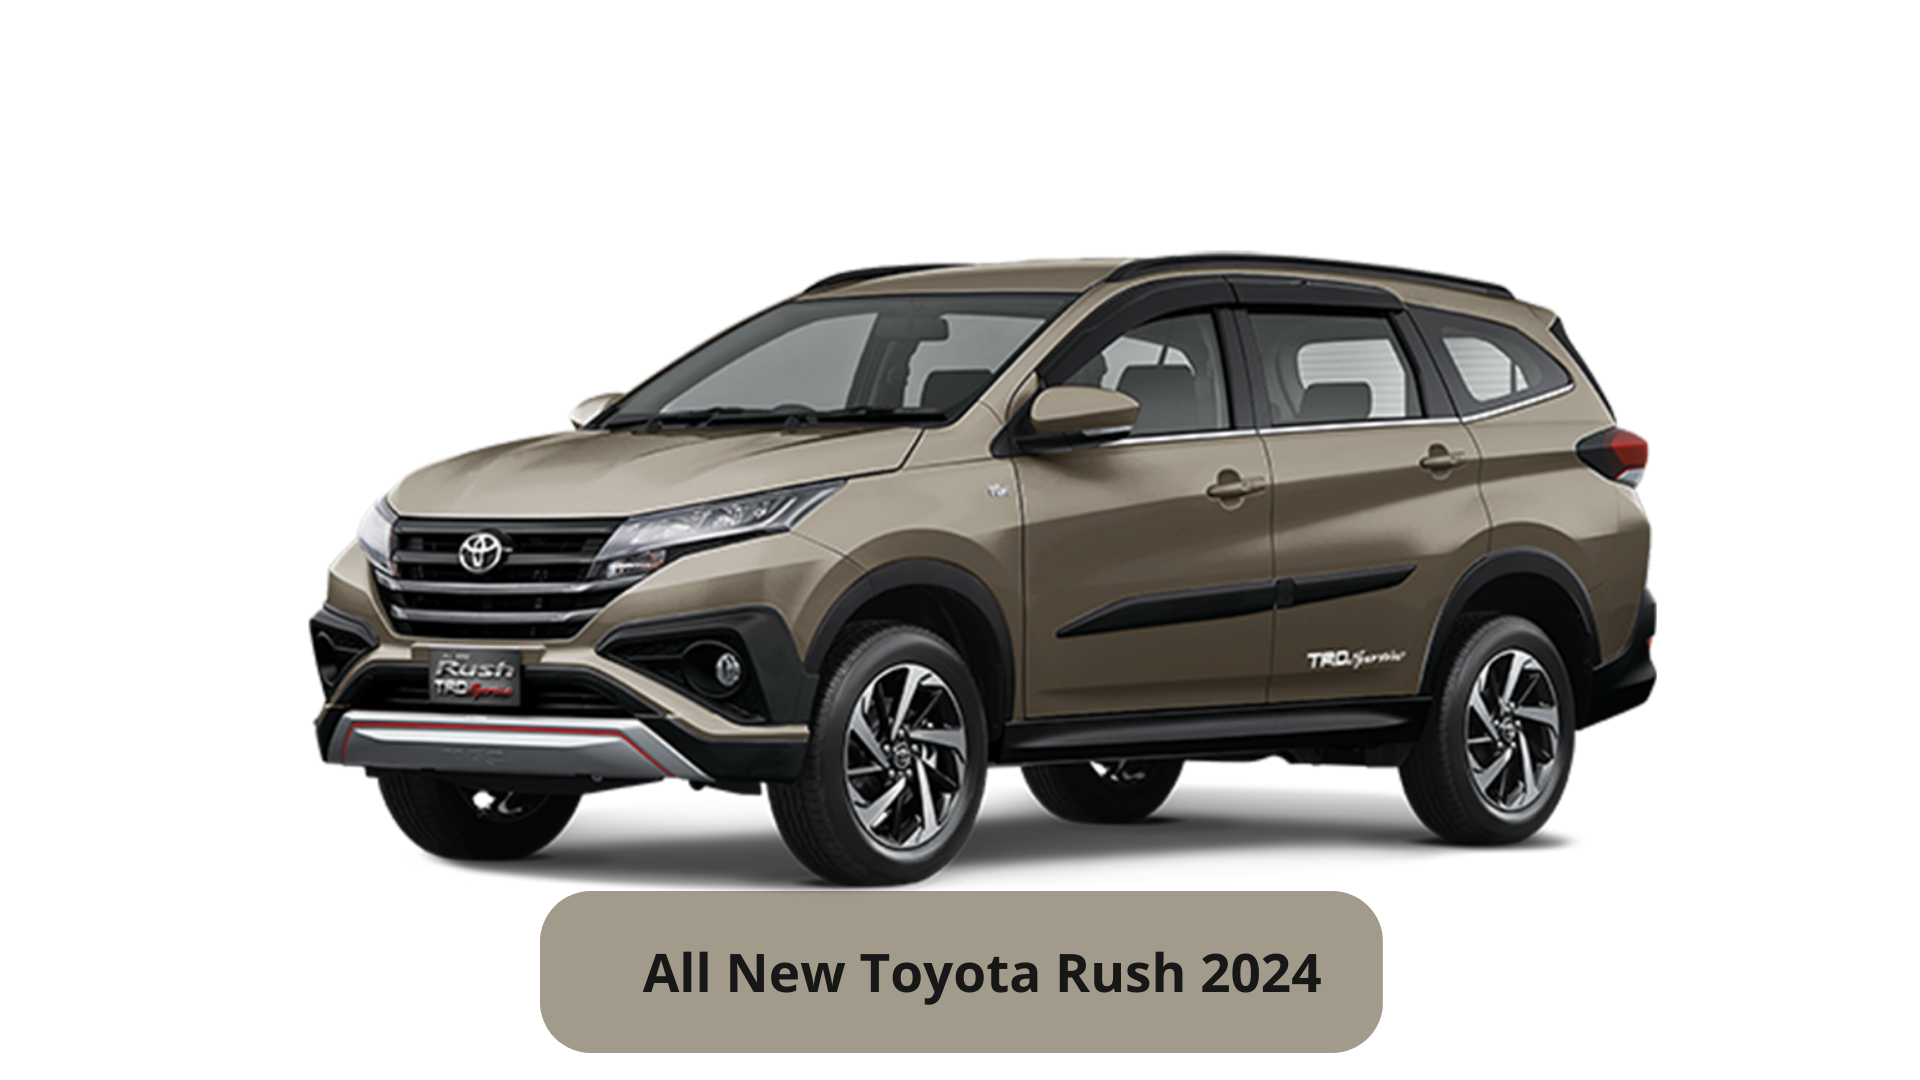 Gagah dan Futuristik, Begini Spesifikasi All New Toyota Rush 2024 yang Bikin Pesaingnya Merinding